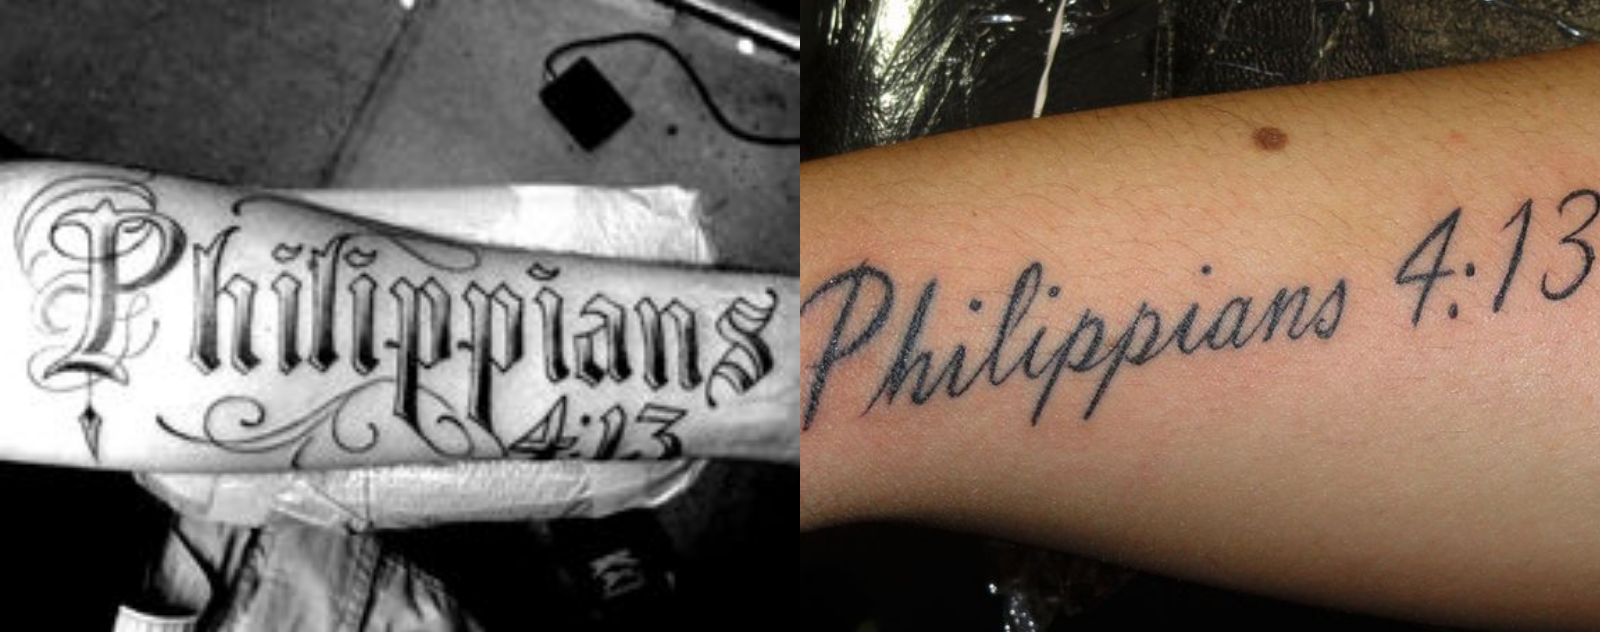 philippians-4-13-tattoo-forearm-10